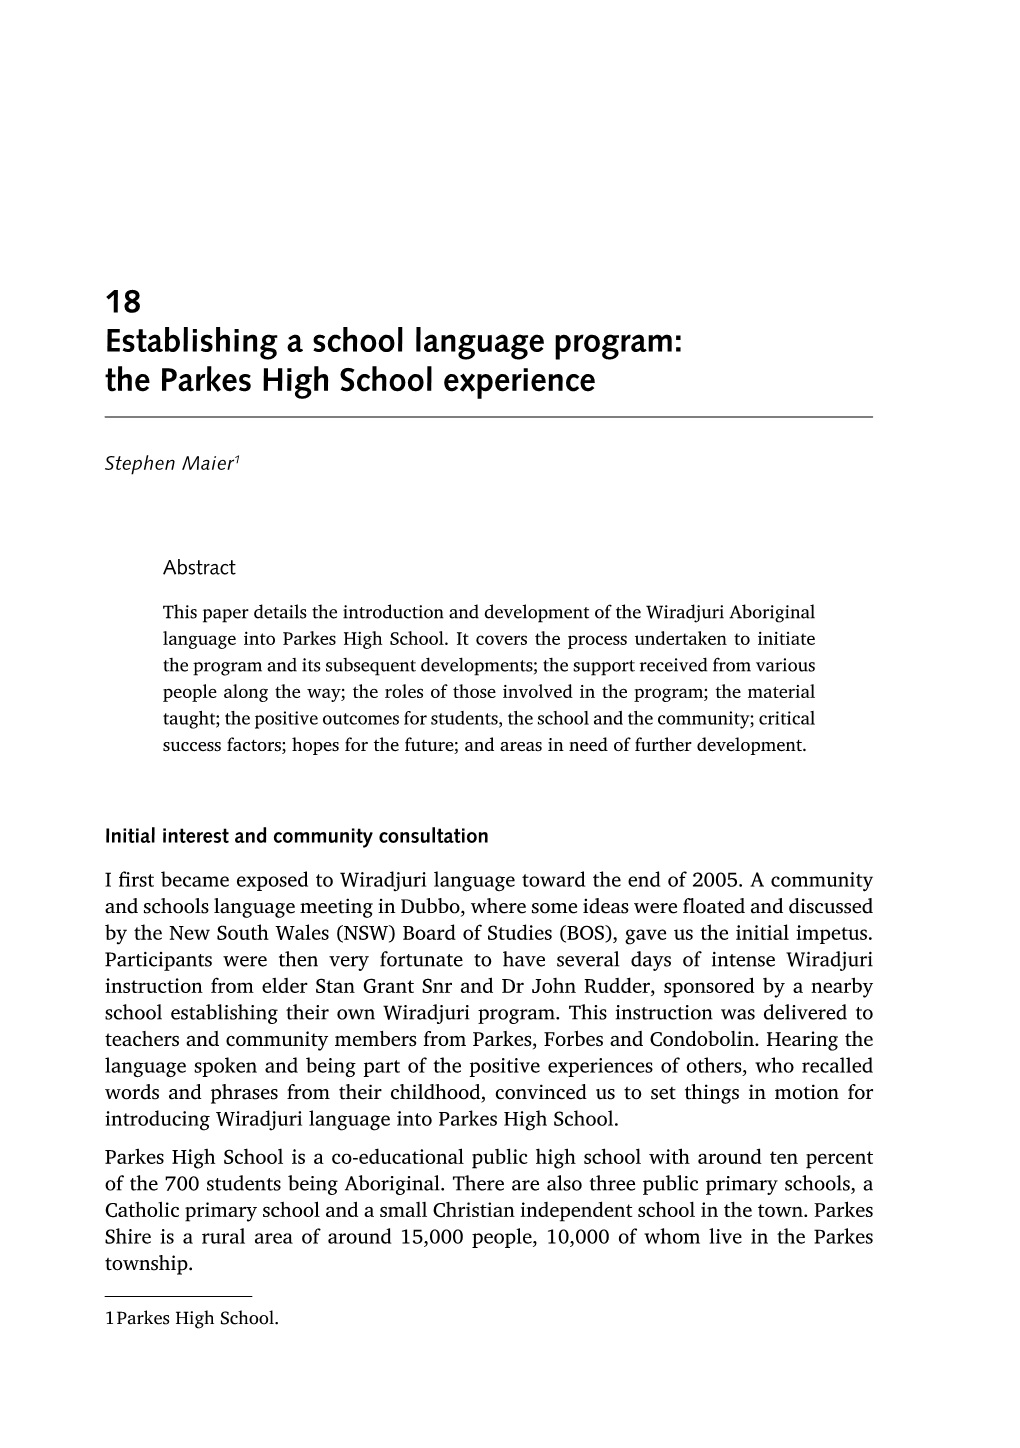 18 Establishing a School Language Program: the Parkes High School Experience